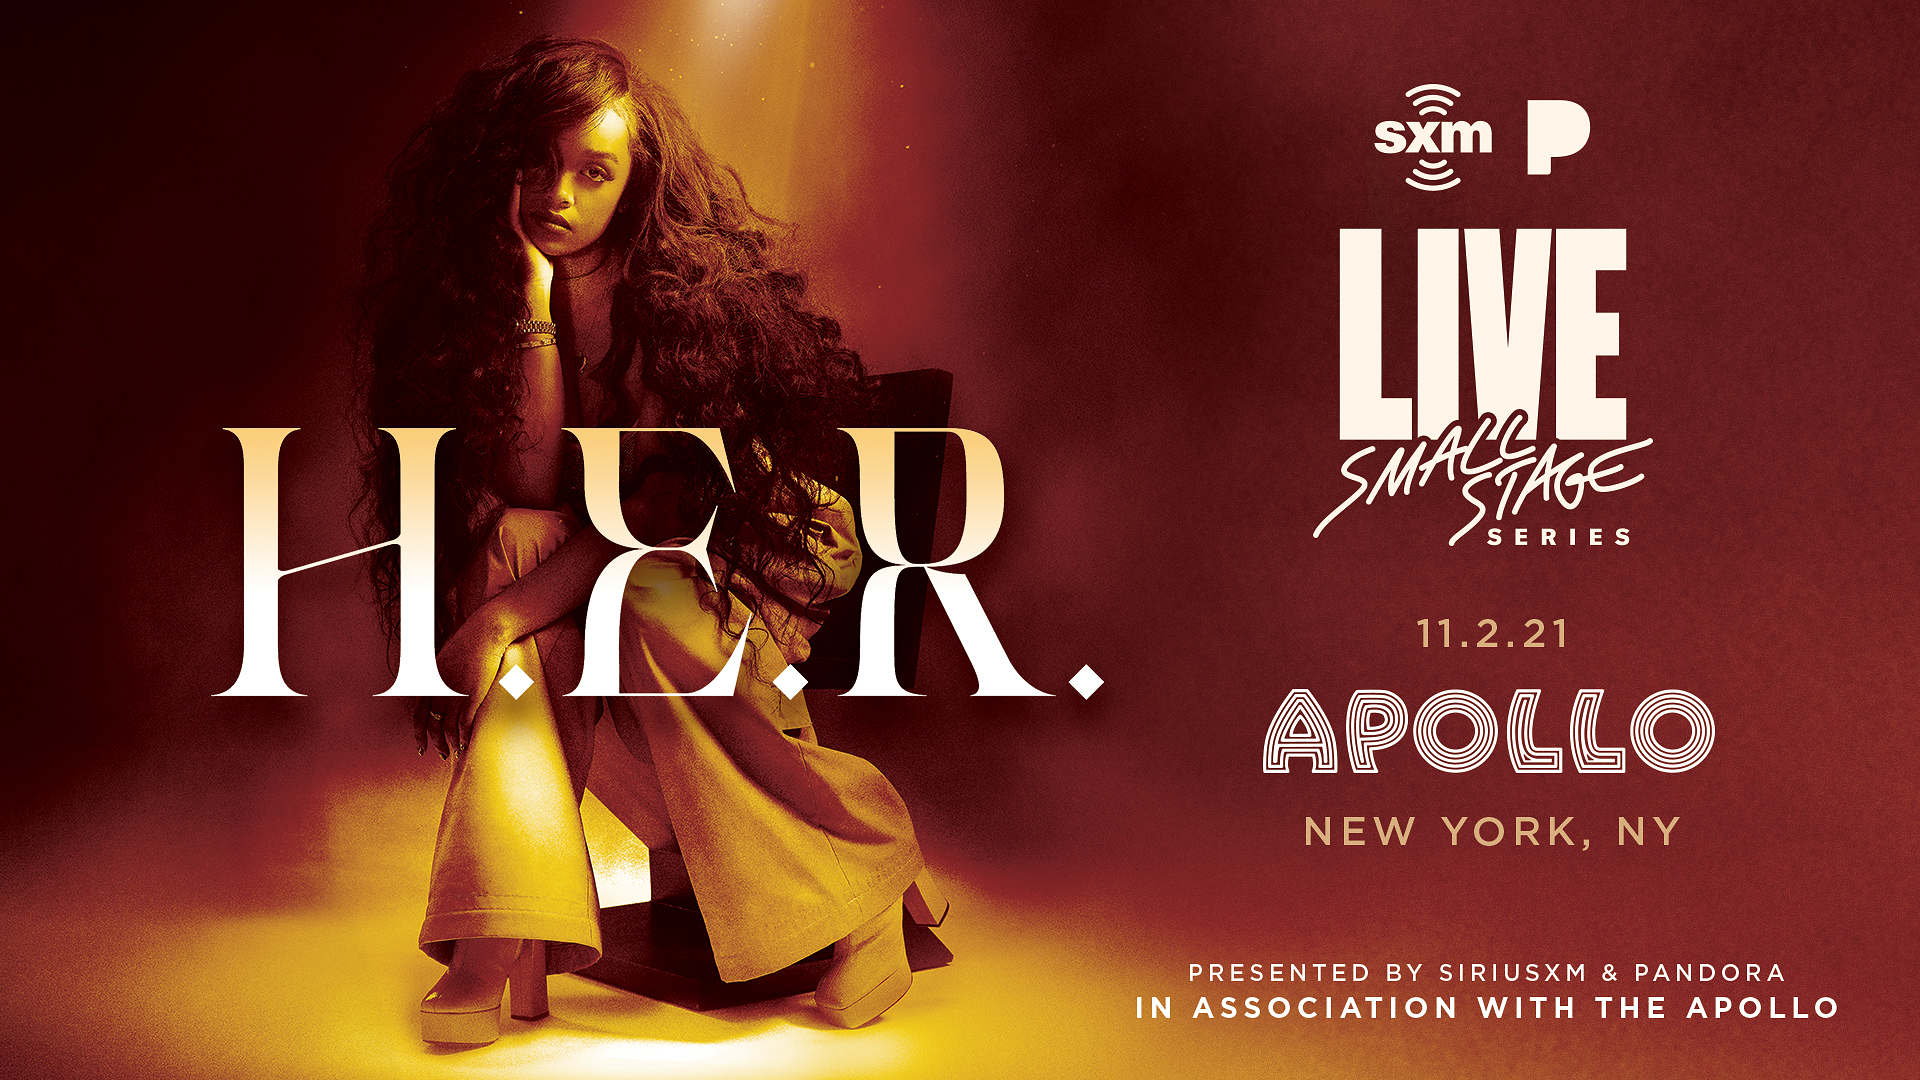 Academy & Grammy Award Winner H.E.R. To Perform At The Apollo For SiriusXM & Pandora